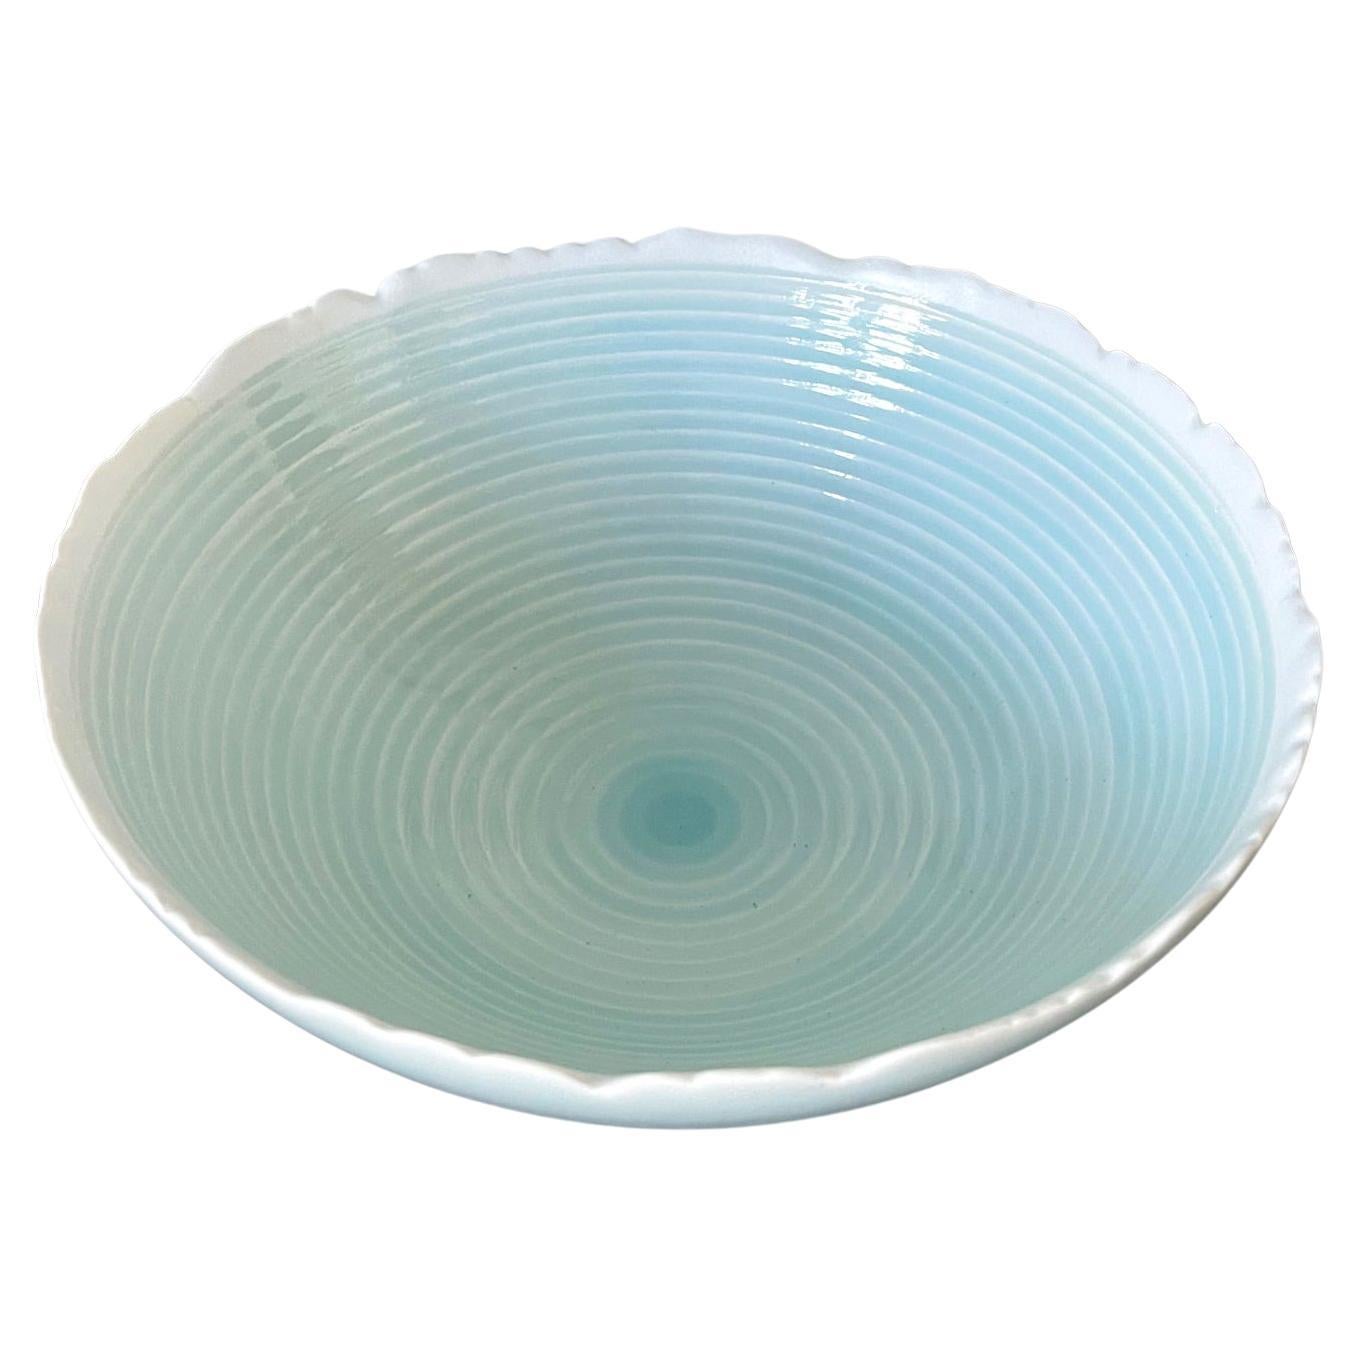 Japanese Contemporary Celadon Ceramic Bowl by Ono Kotaro For Sale